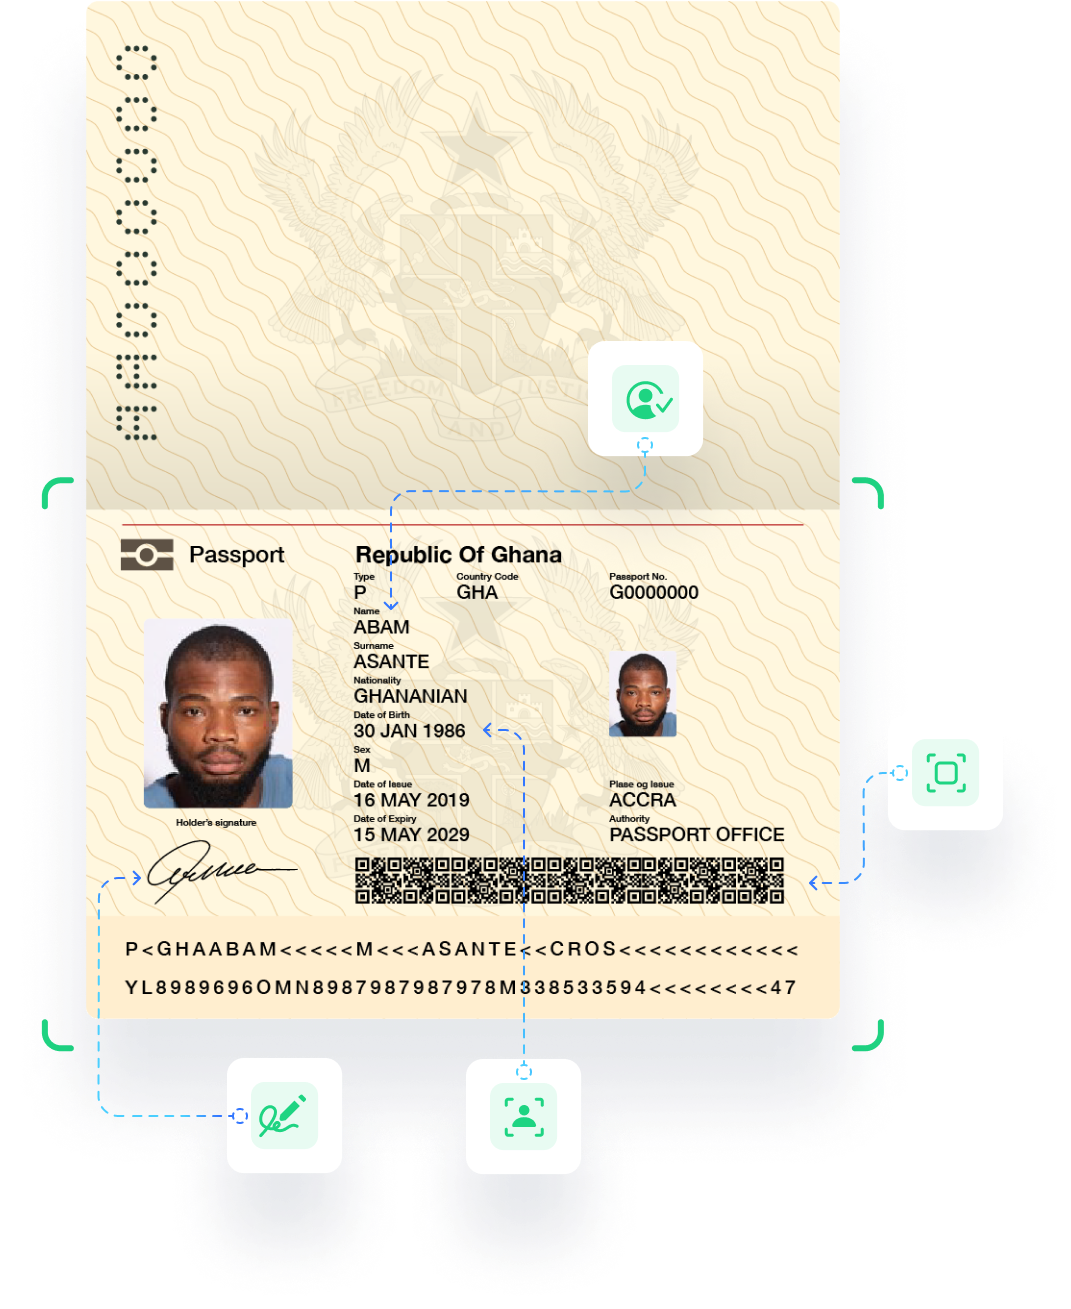 Ghana Passport verification digital identity services